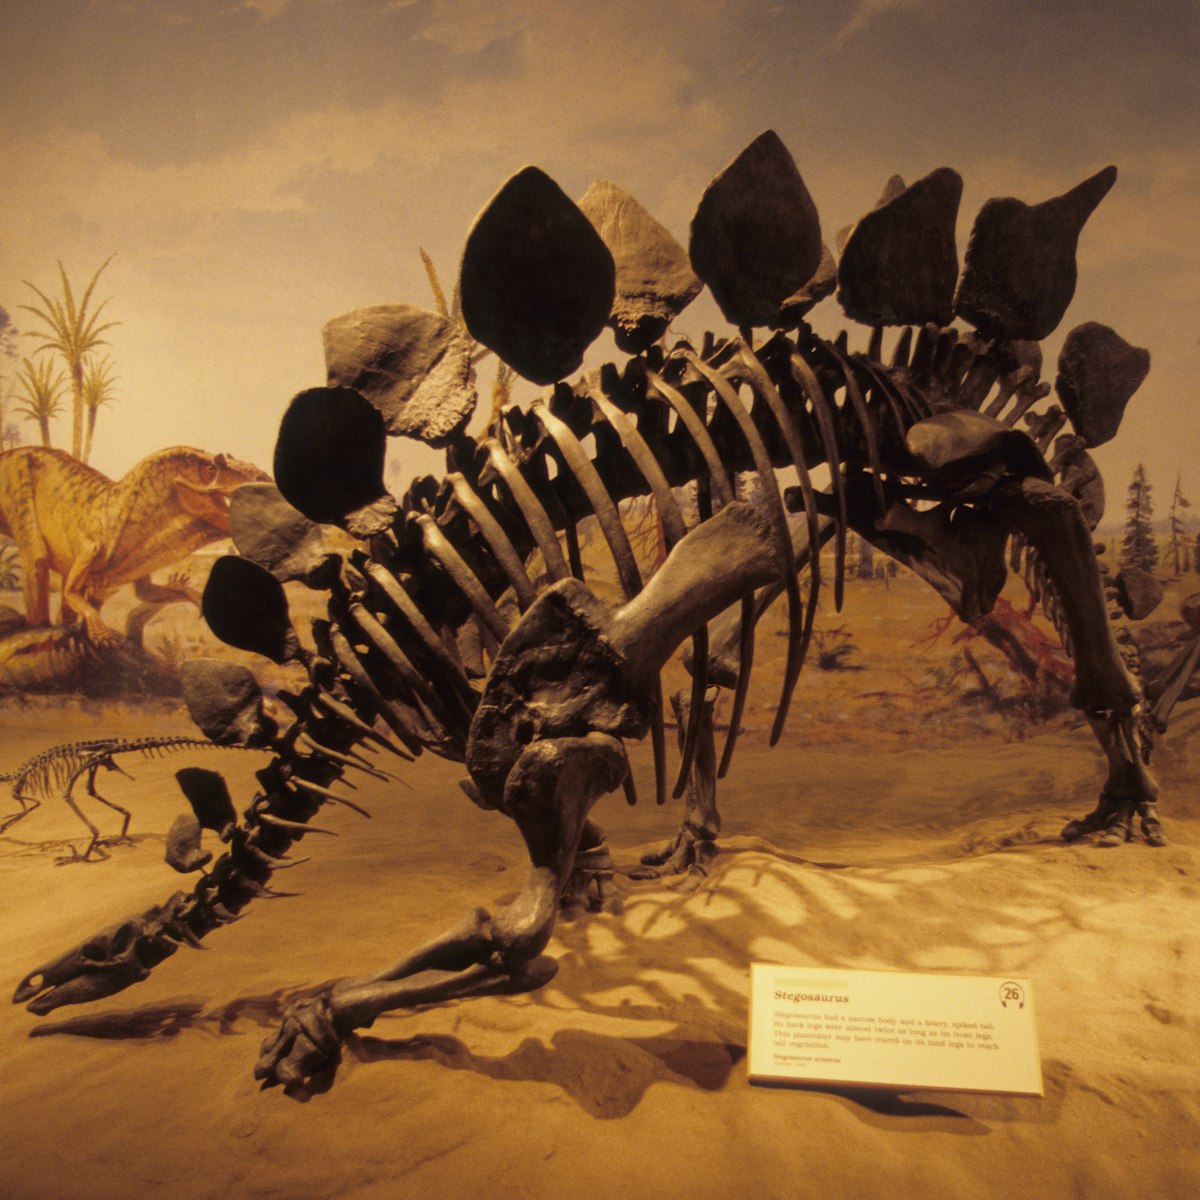 CANADA - 2003/01/01: Canada, Alberta, Drumheller, Royal Tyrrell Museum, Interior, Dinosaur Skeleton, Stegosaurus. (Photo by Wolfgang Kaehler/LightRocket via Getty Images)